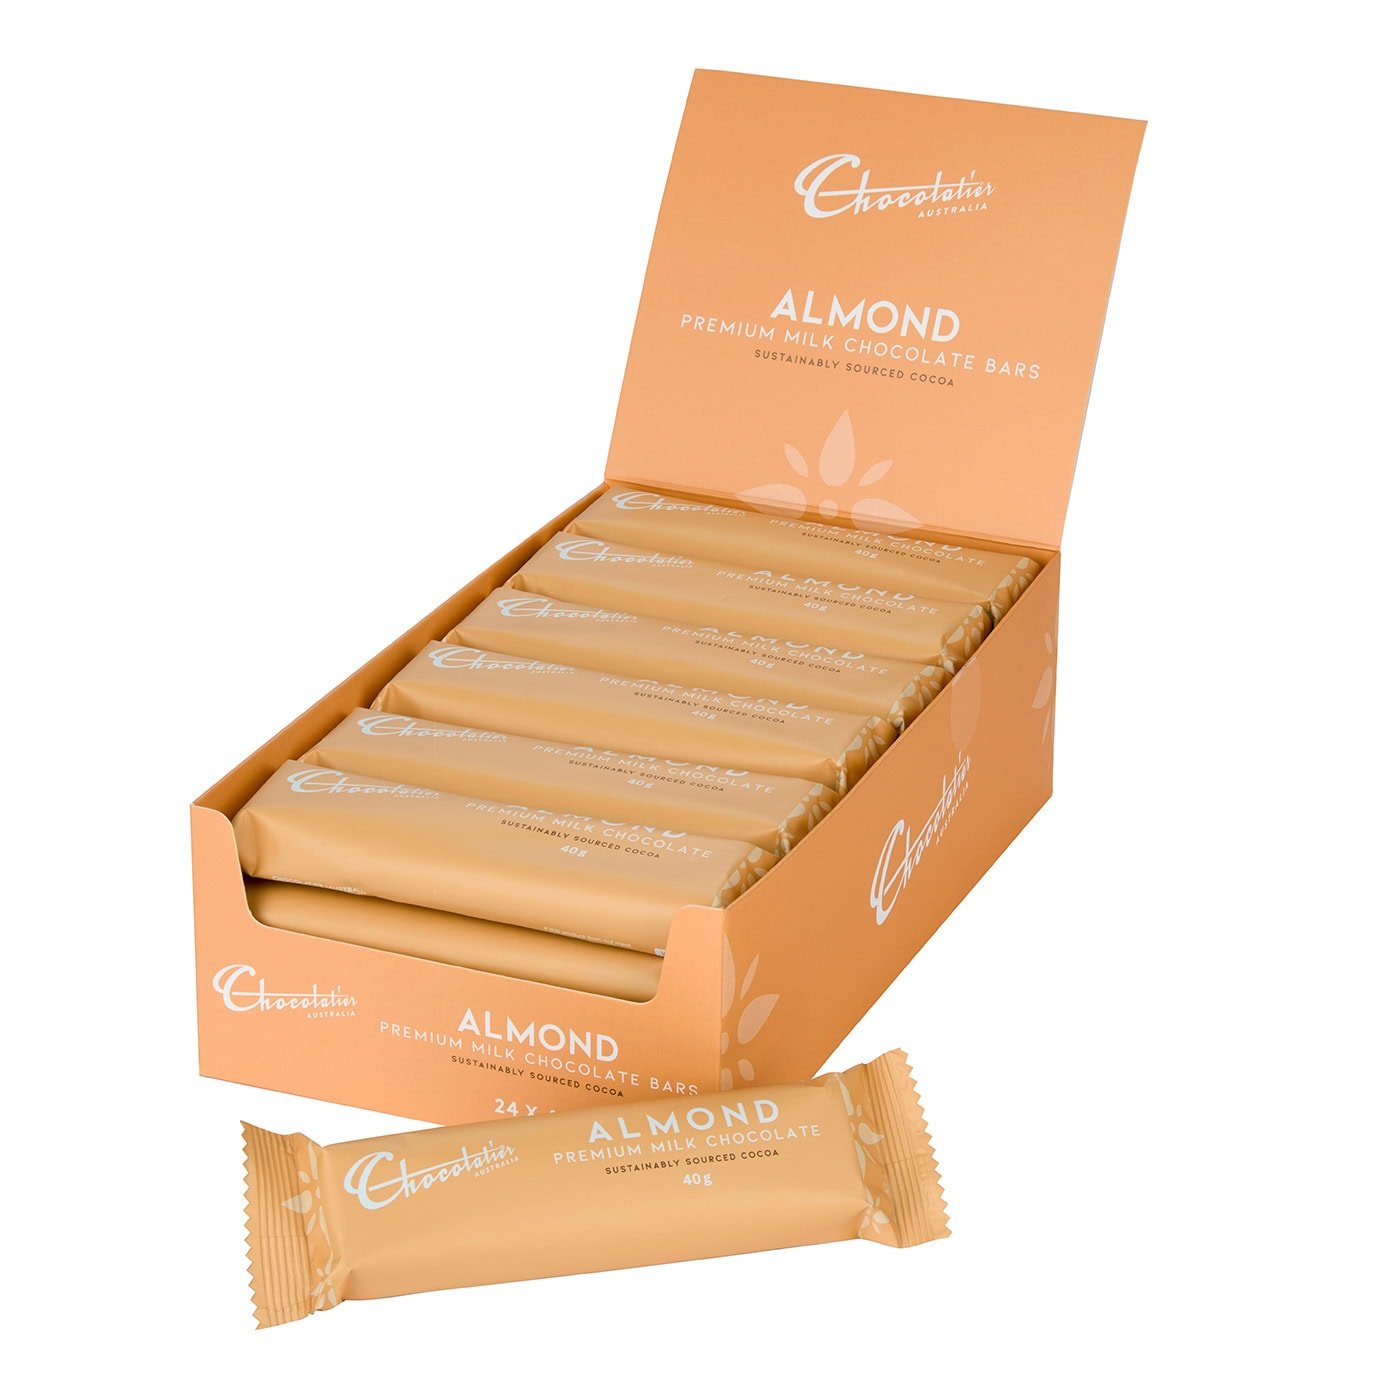 CU0015-Chocolatier-Australia-Almond-Milk-Chocolate-Bar-40g-1400-DIGITAL-DISPLAY.jpg